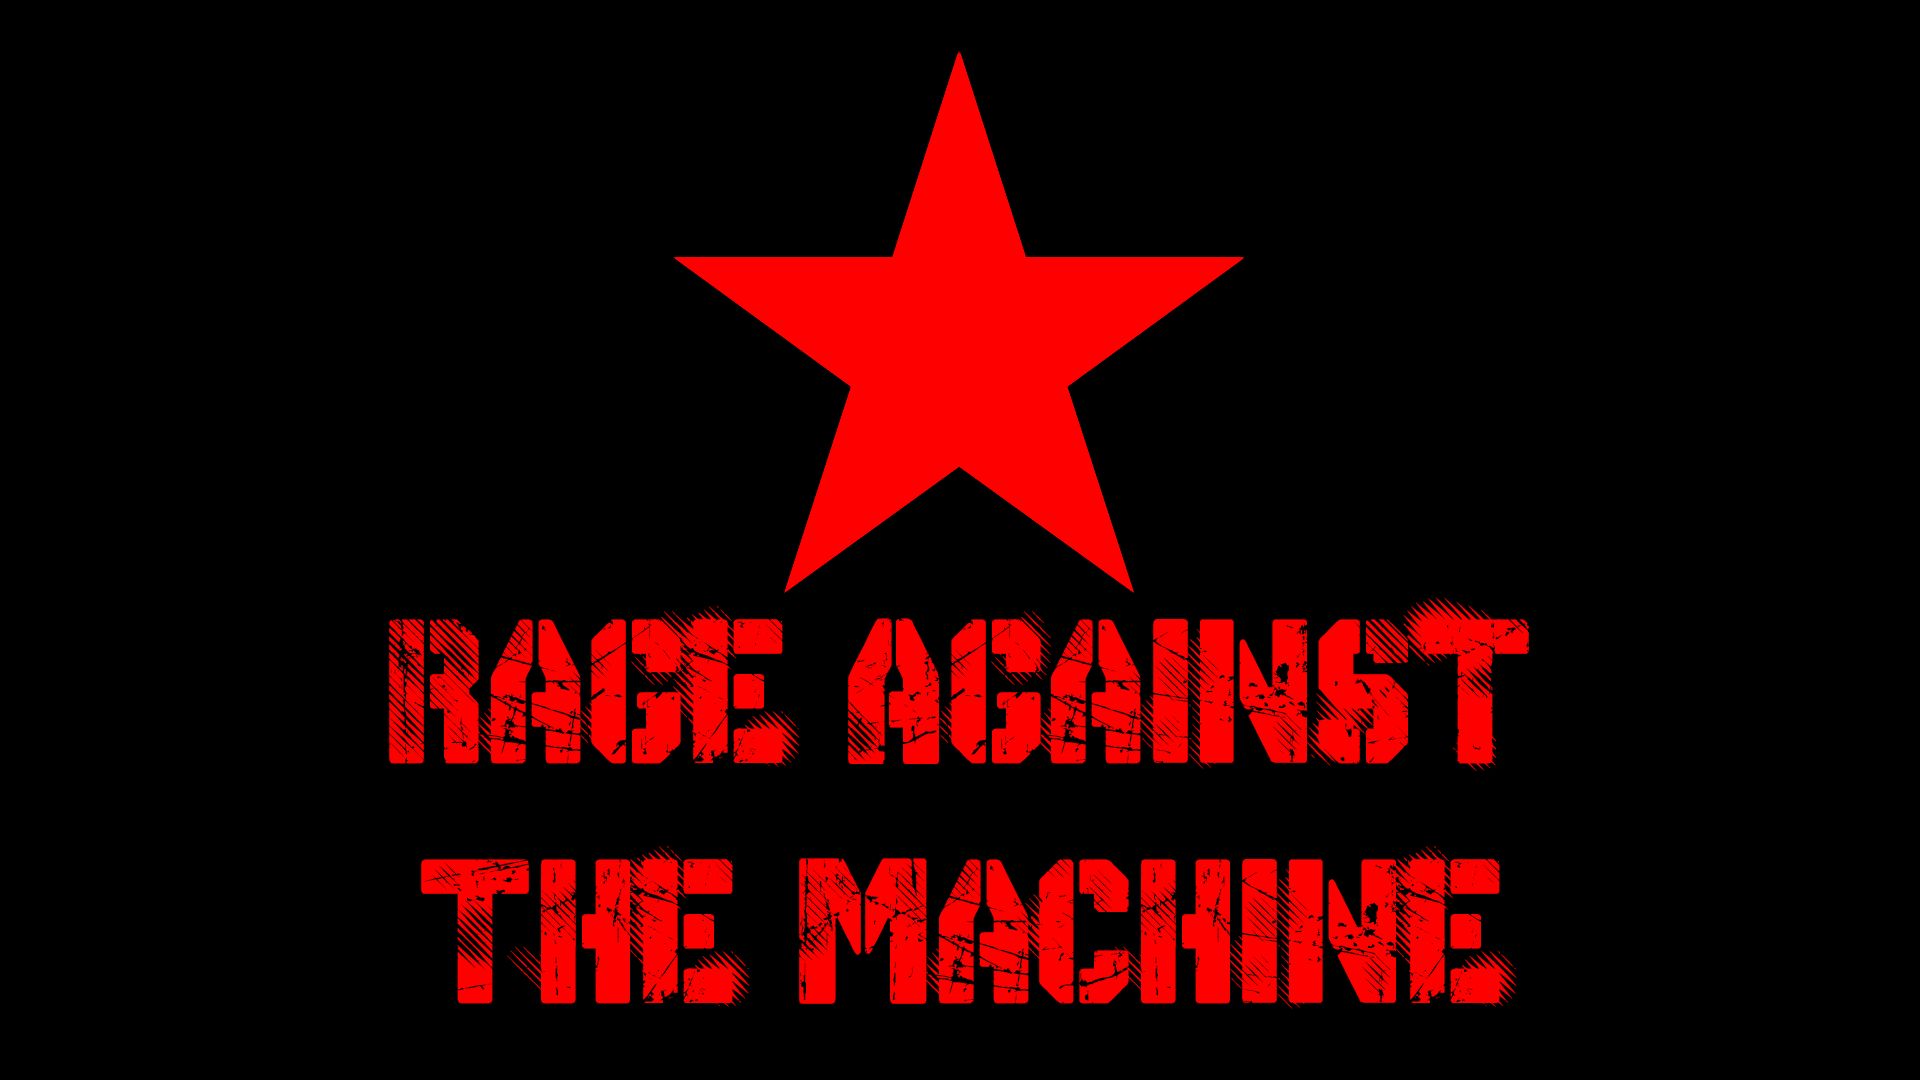 rage against the machine, music